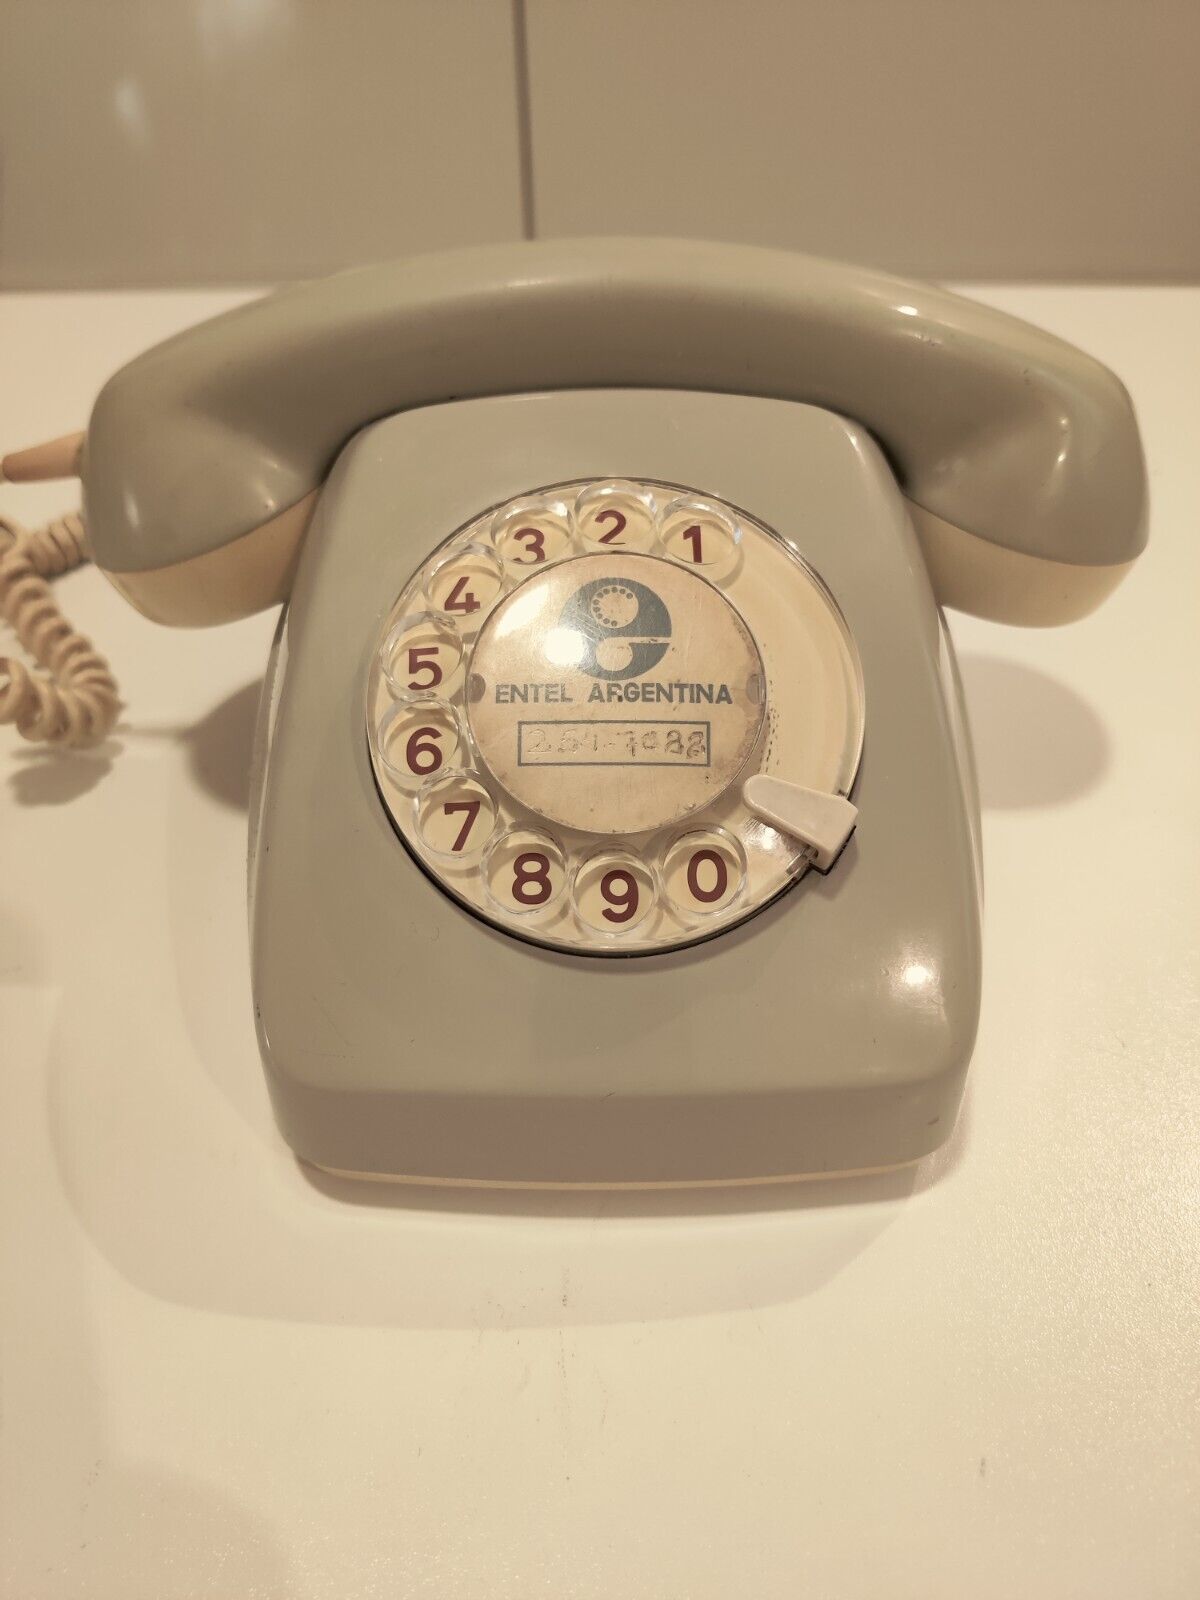 SIEMENS ROTARY TELEPHONE TLF 300. VINTAGE. SPACE AGE 1970s